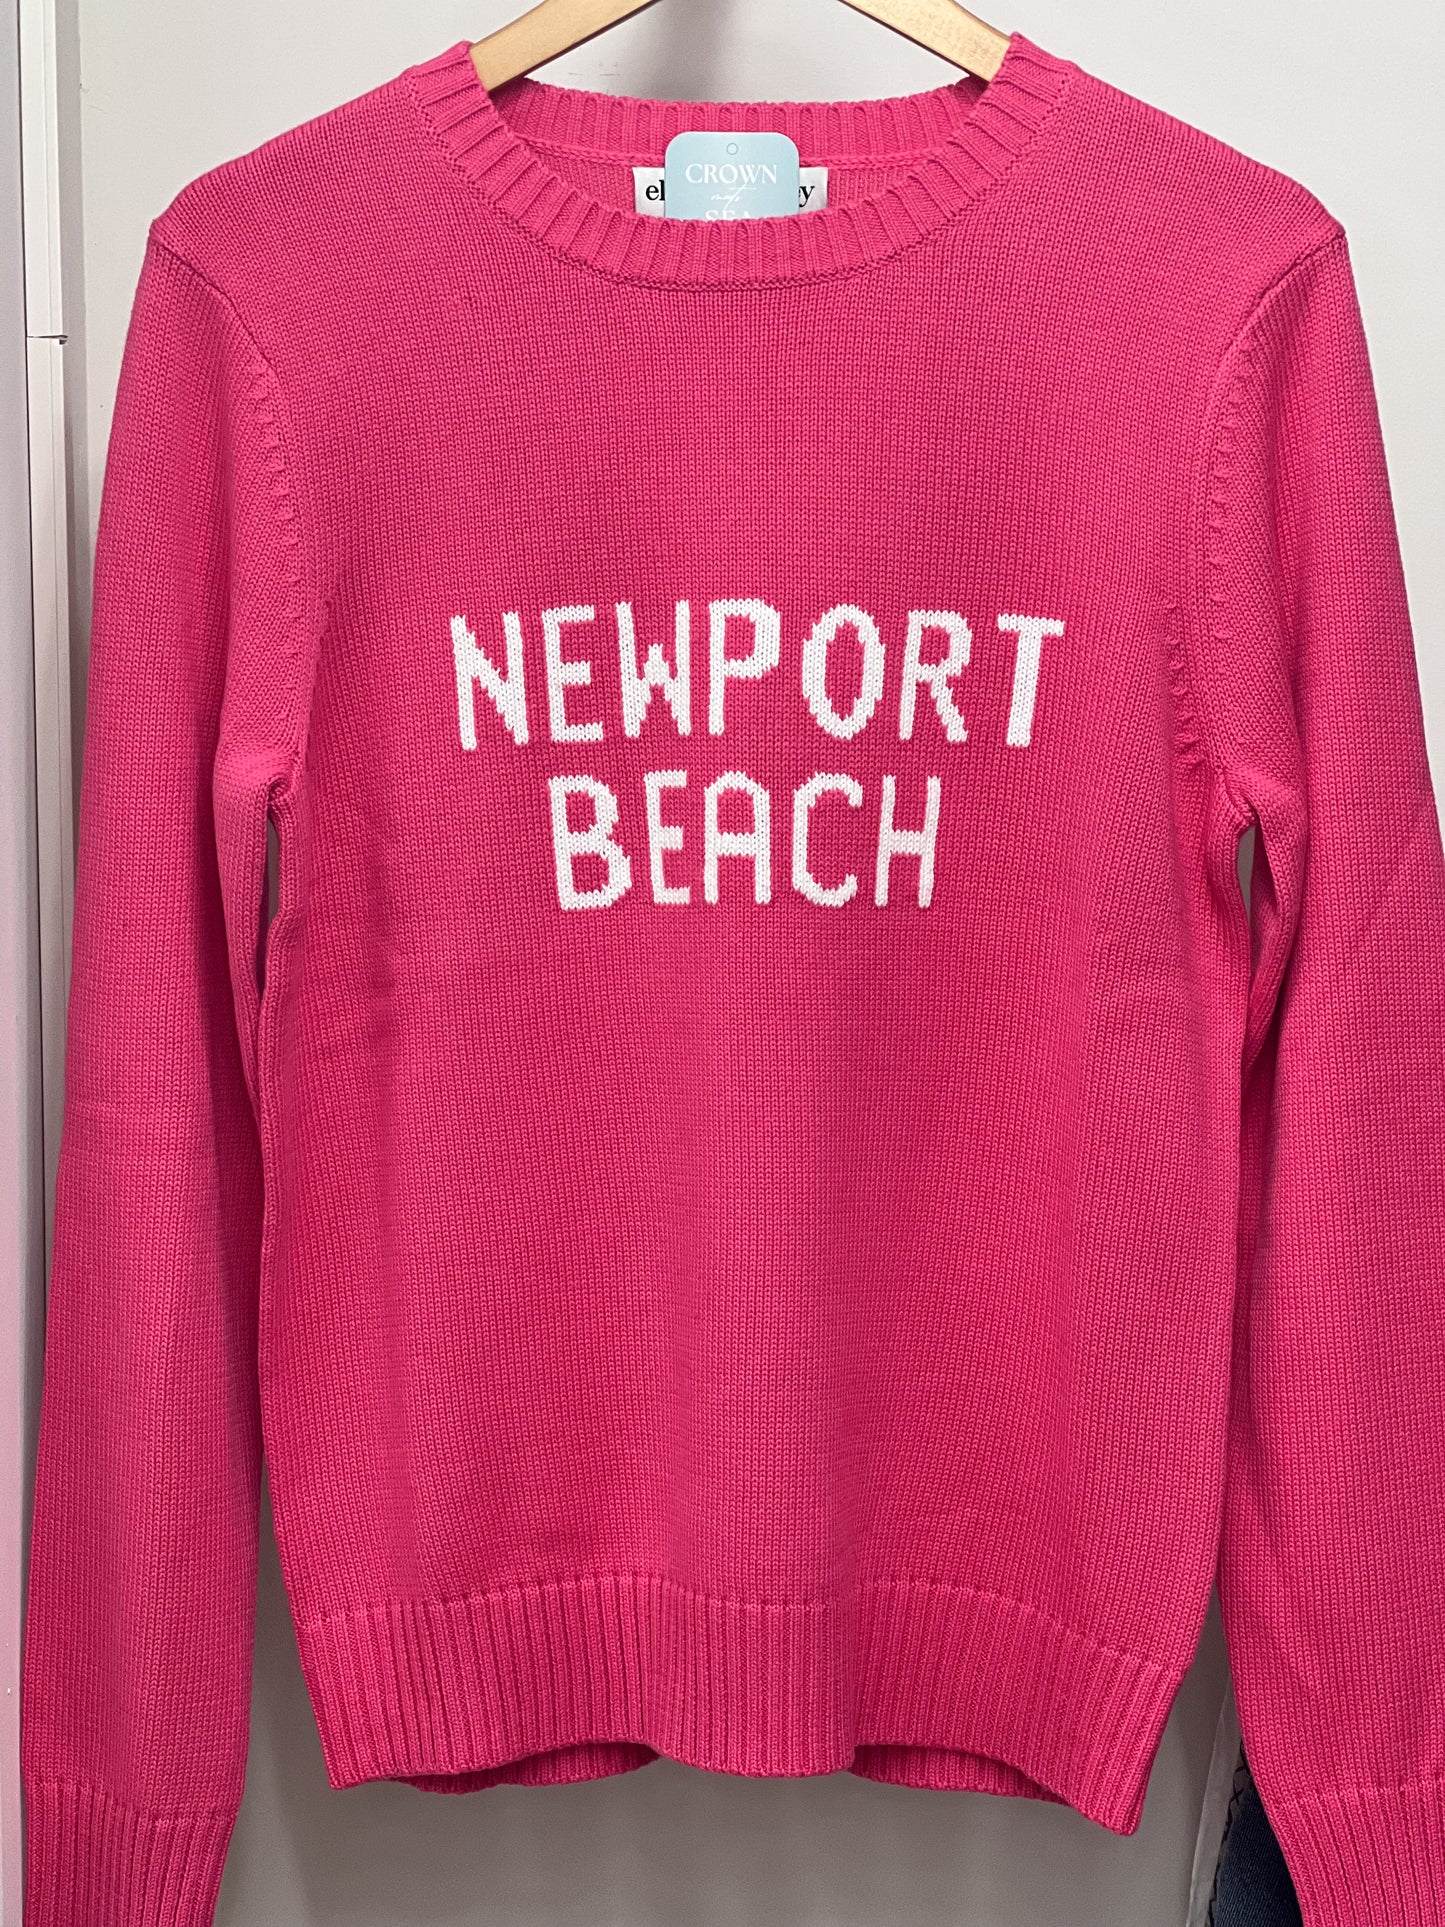 Newport Beach Sweater